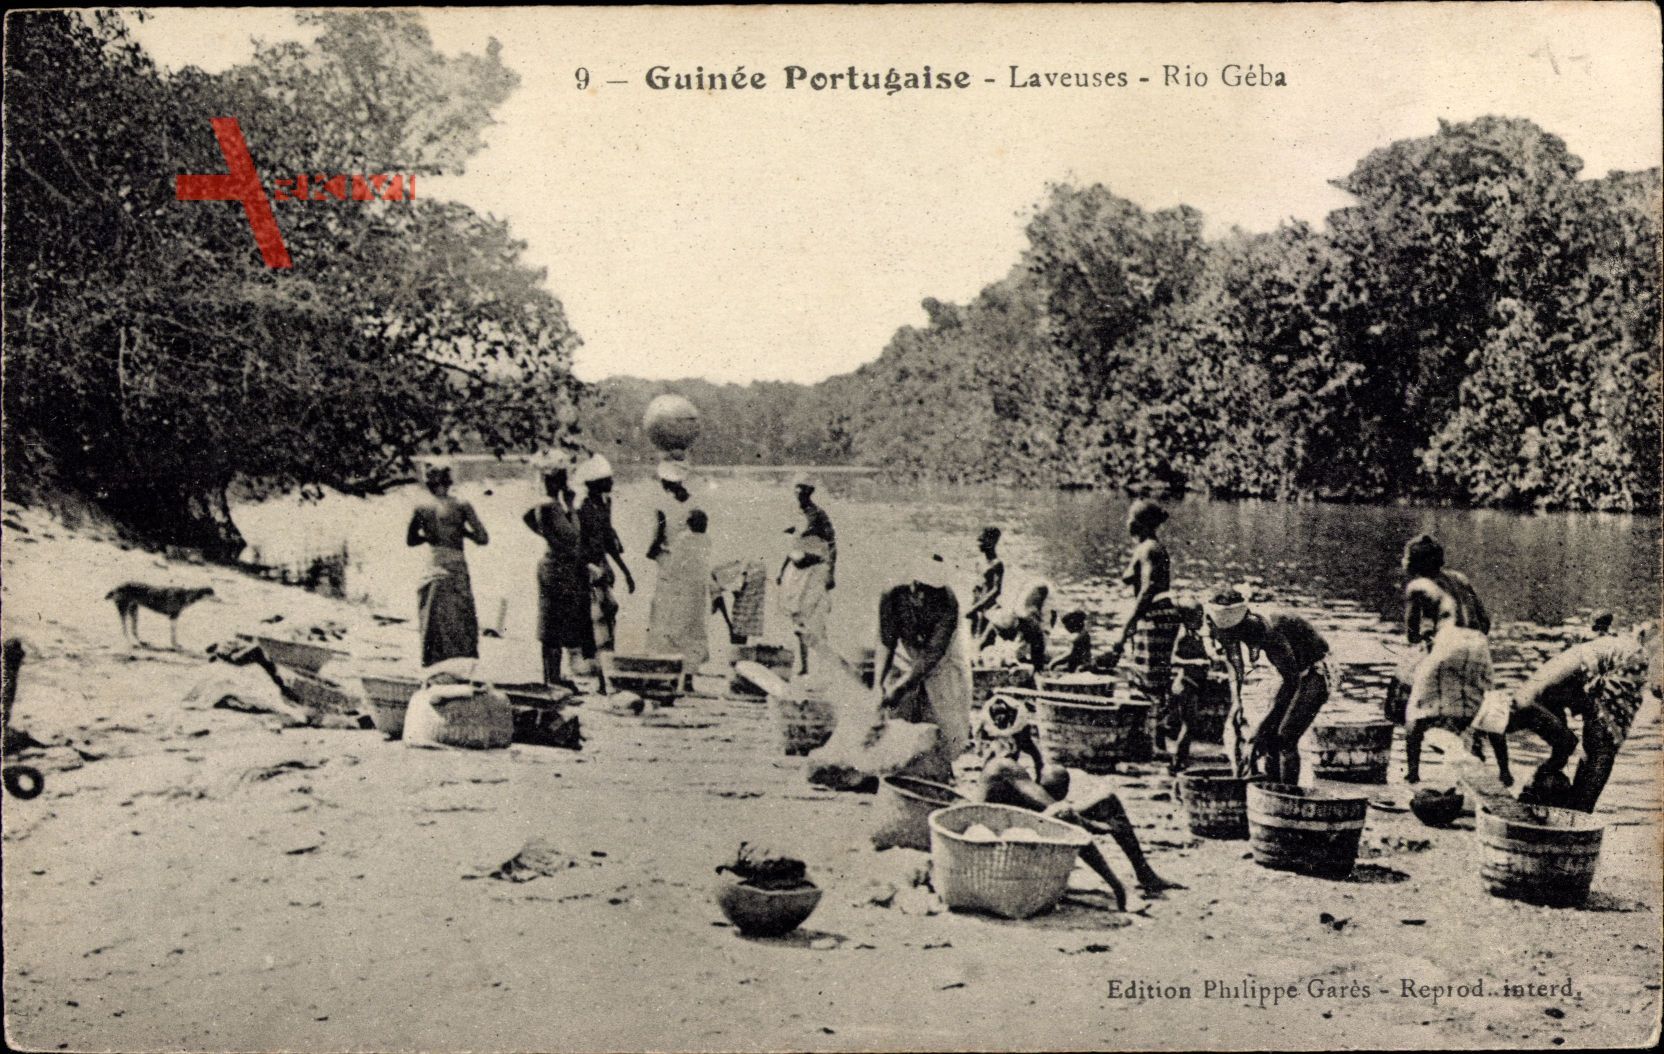 Bissau Guinee Portugaise Guinea, Laveuses, Rio Geba, Wäscherinnen